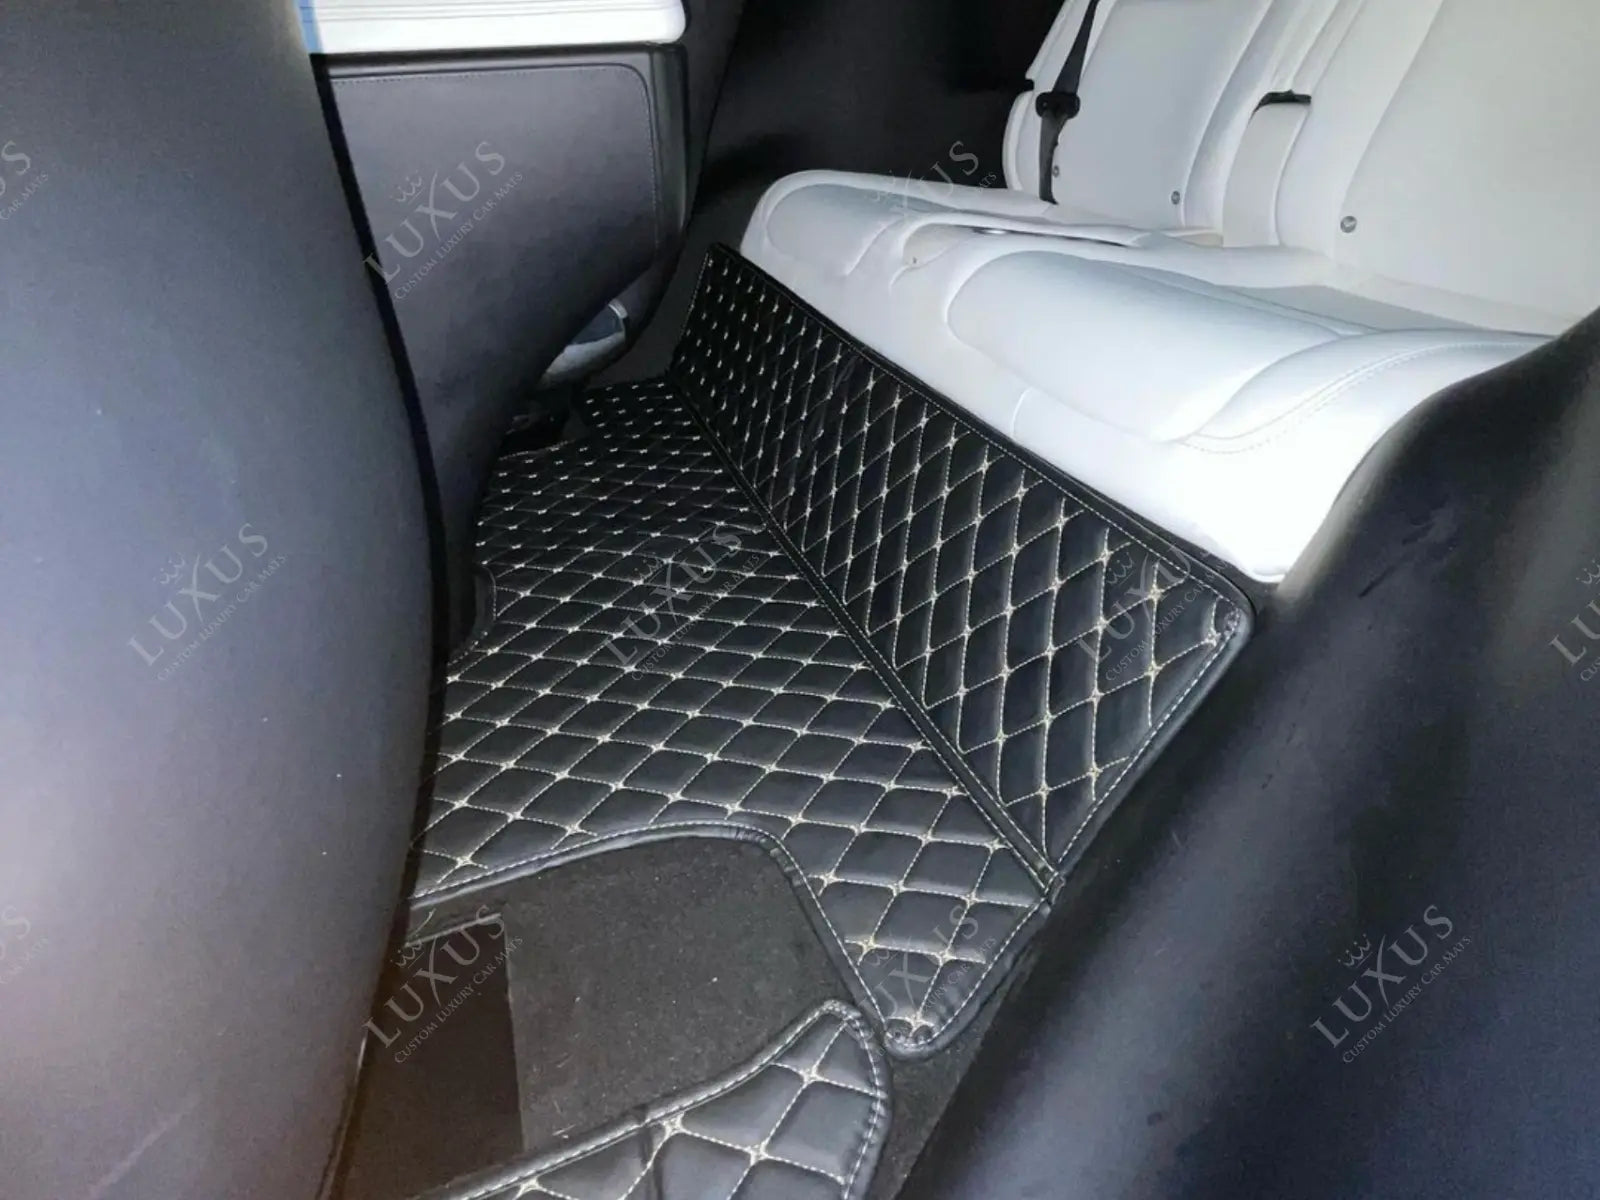 Louis Vuitton Car Floor Mat Available In Ash N Black Design 